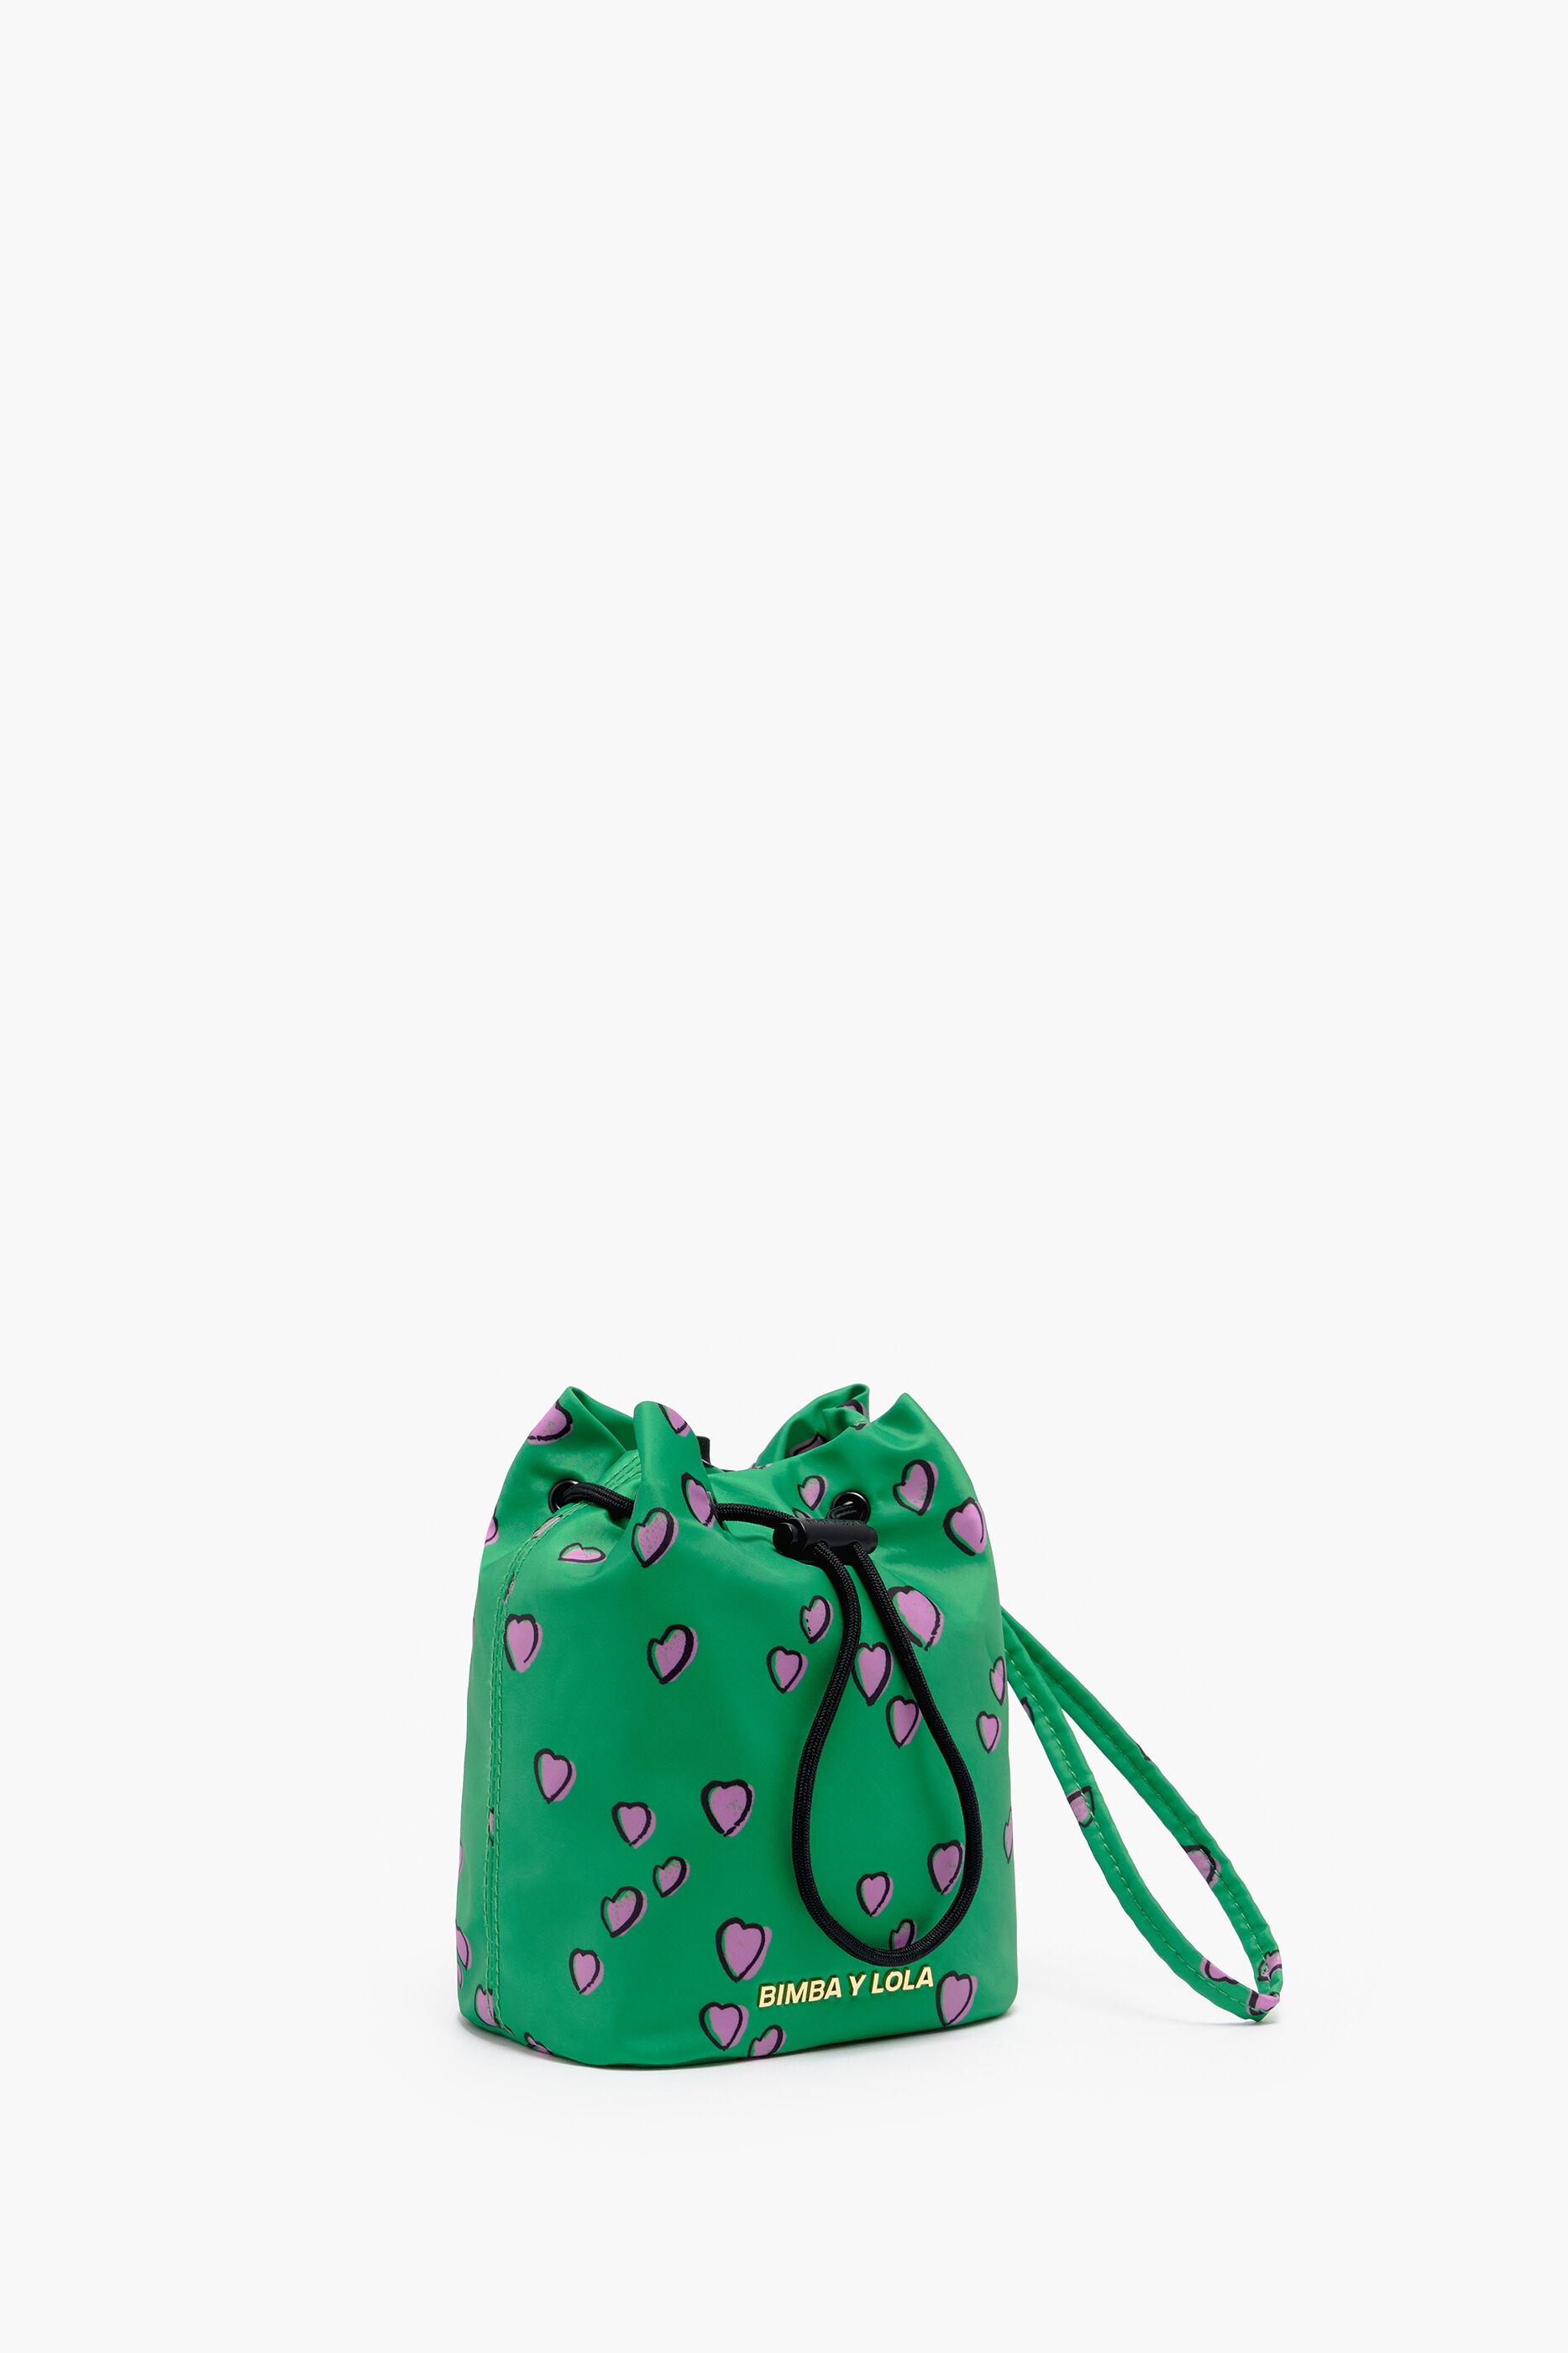 BIMBA Y LOLA Bags & Handbags for Women for sale | eBay